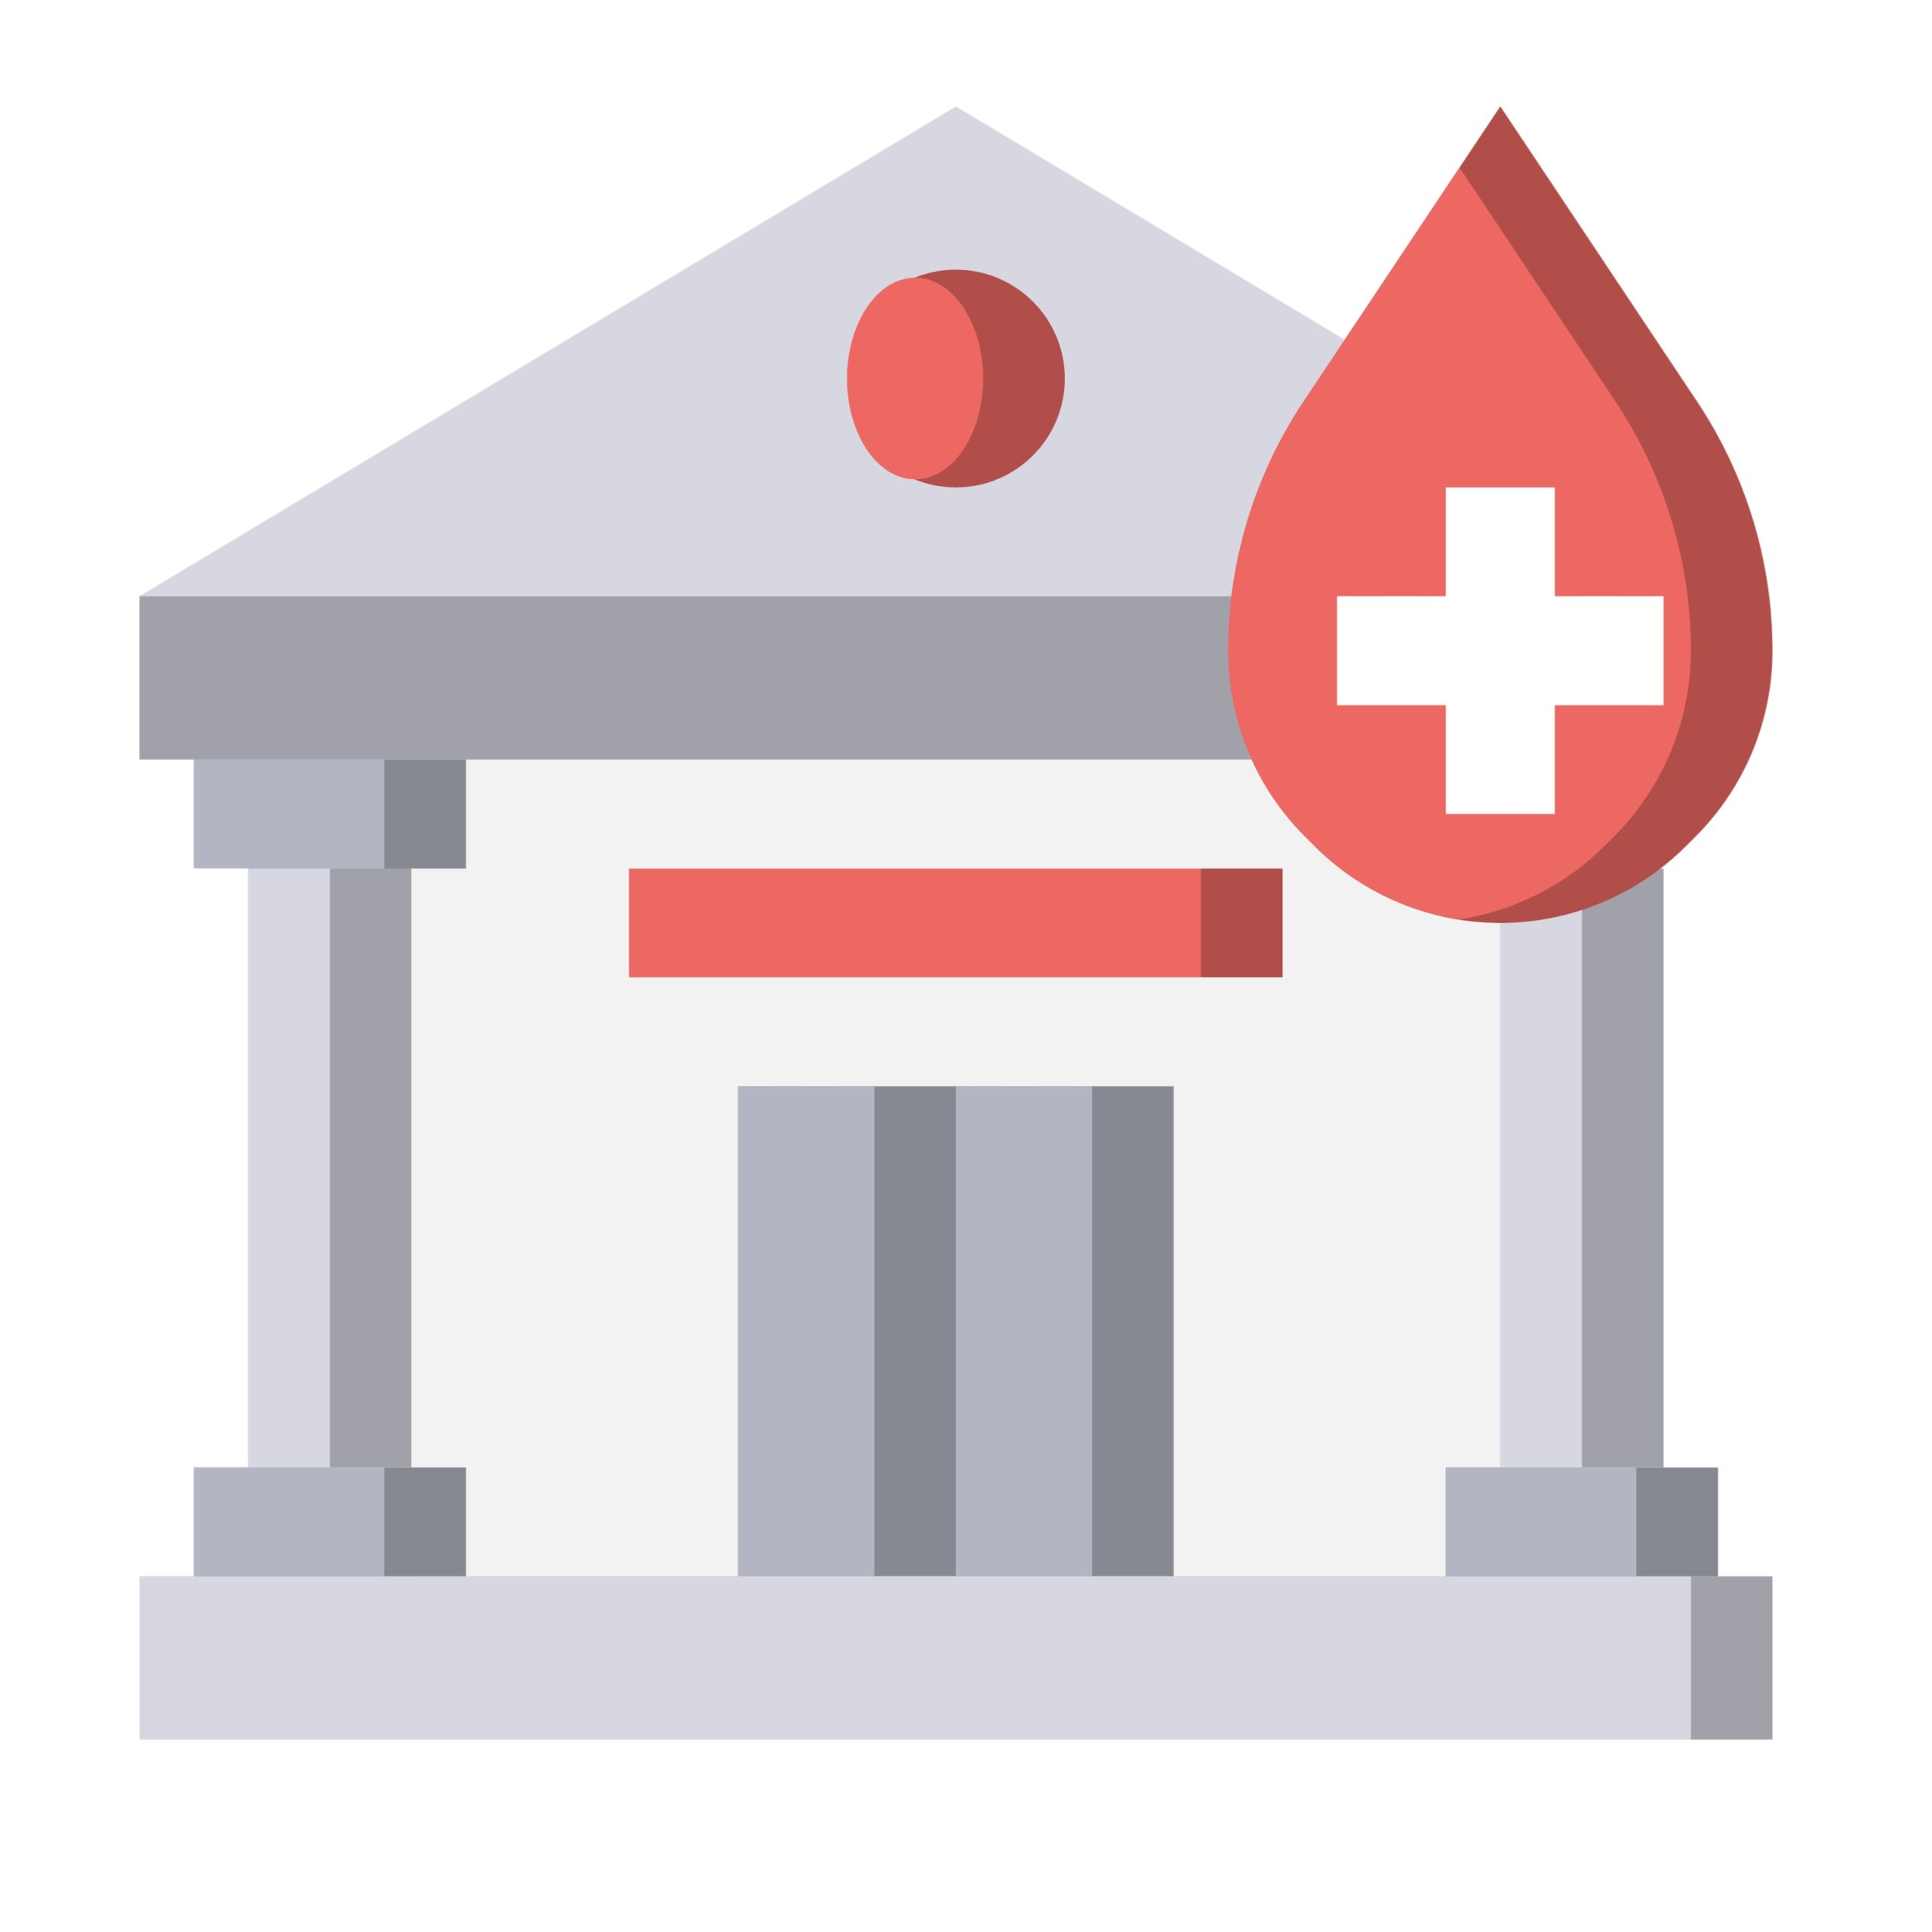 Blood Bank License or Tie-up